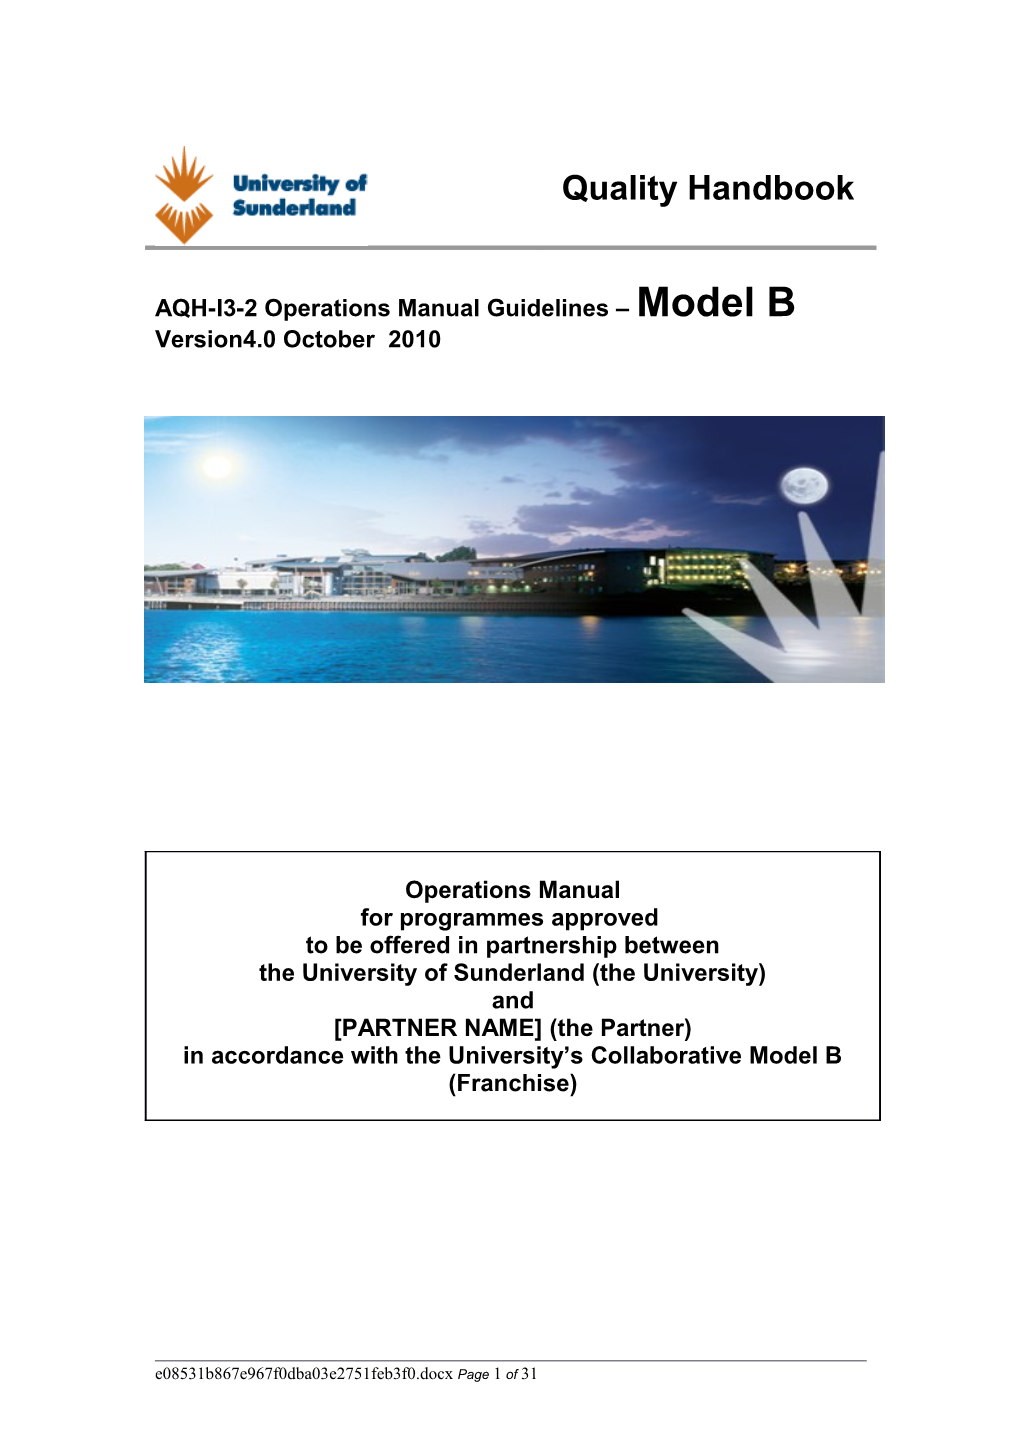 AQH-I3-2 Operations Manual Guidelines Model B